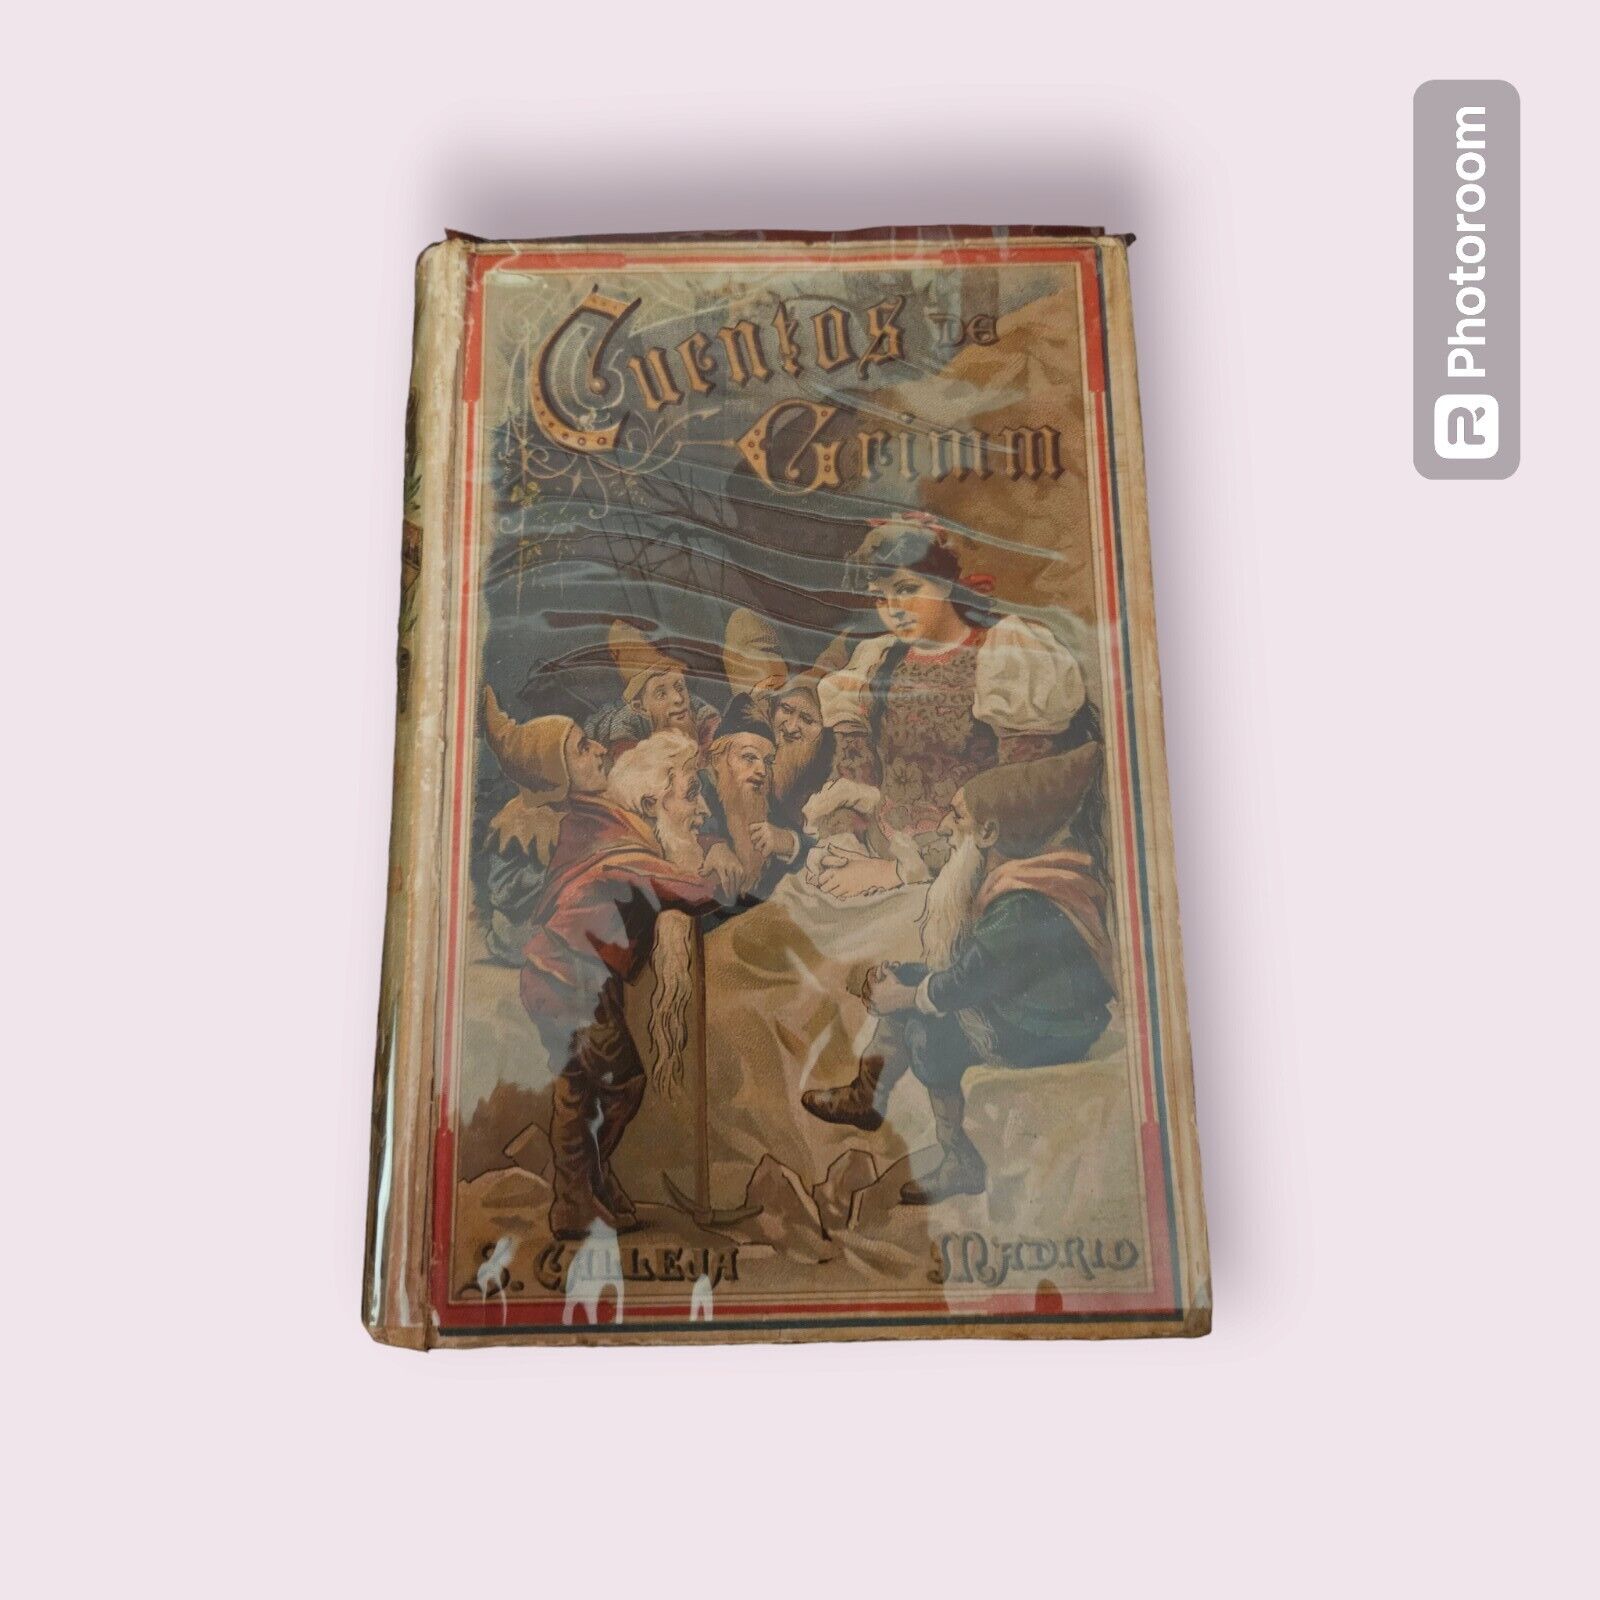 Cuentos De Grimm By S. Galleja 1876 From Spain Very Rare